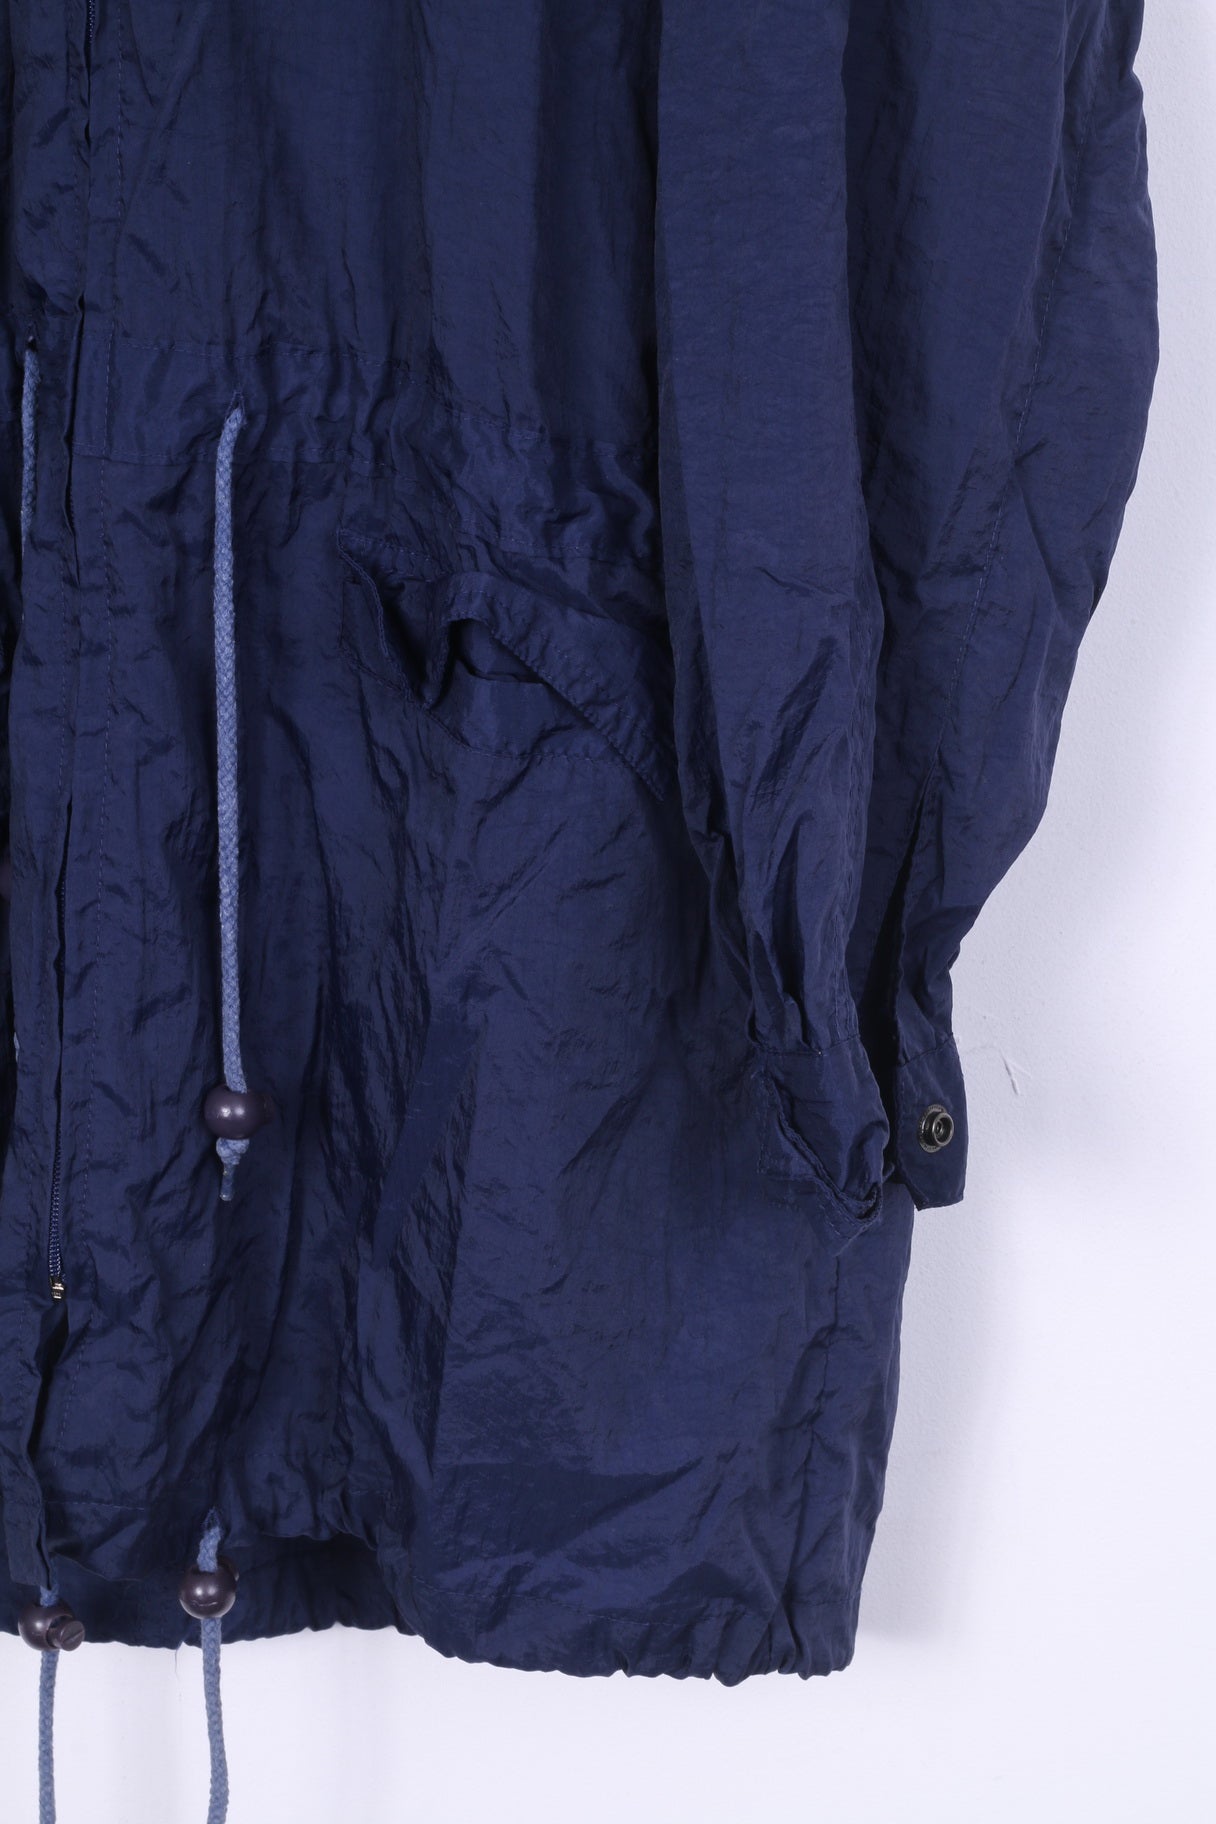 Casual Womens 40 L Parka Rain Jacket Full Zipper Nylon Waterproof Hooded Lightweight Nylon Vintage